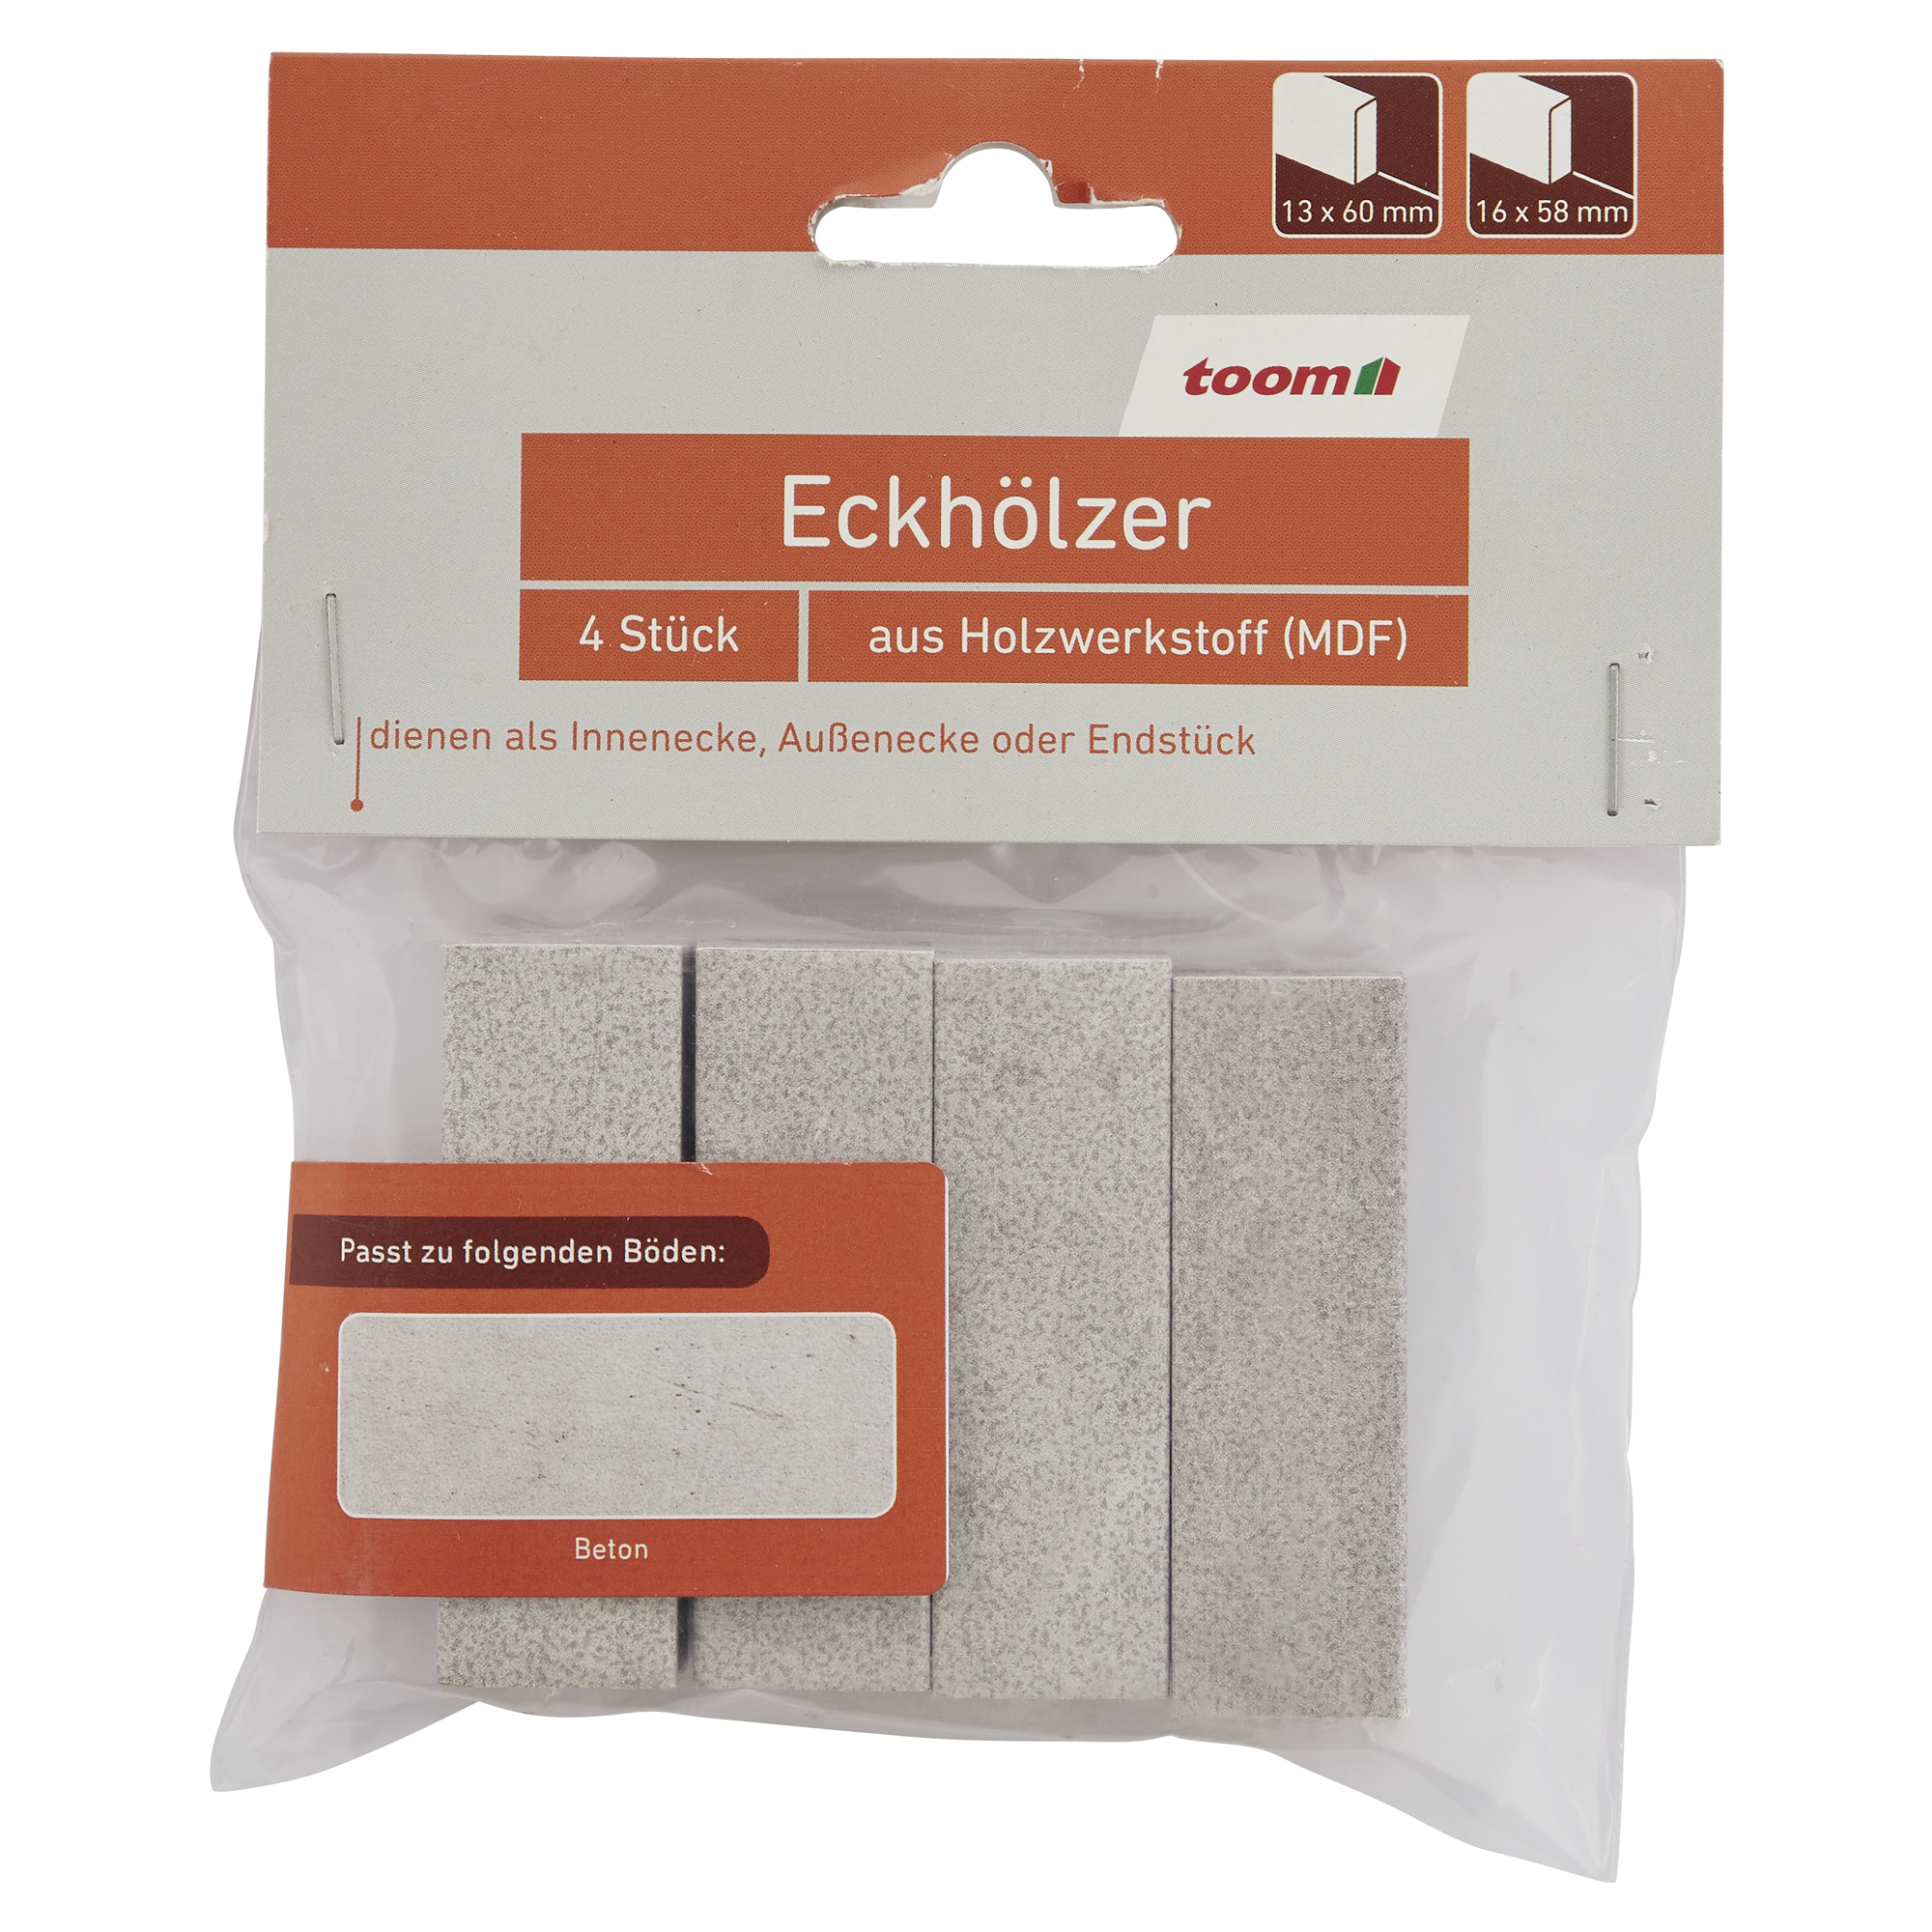 Eckholz beton 19 x 60 mm, 4 Stück + product picture